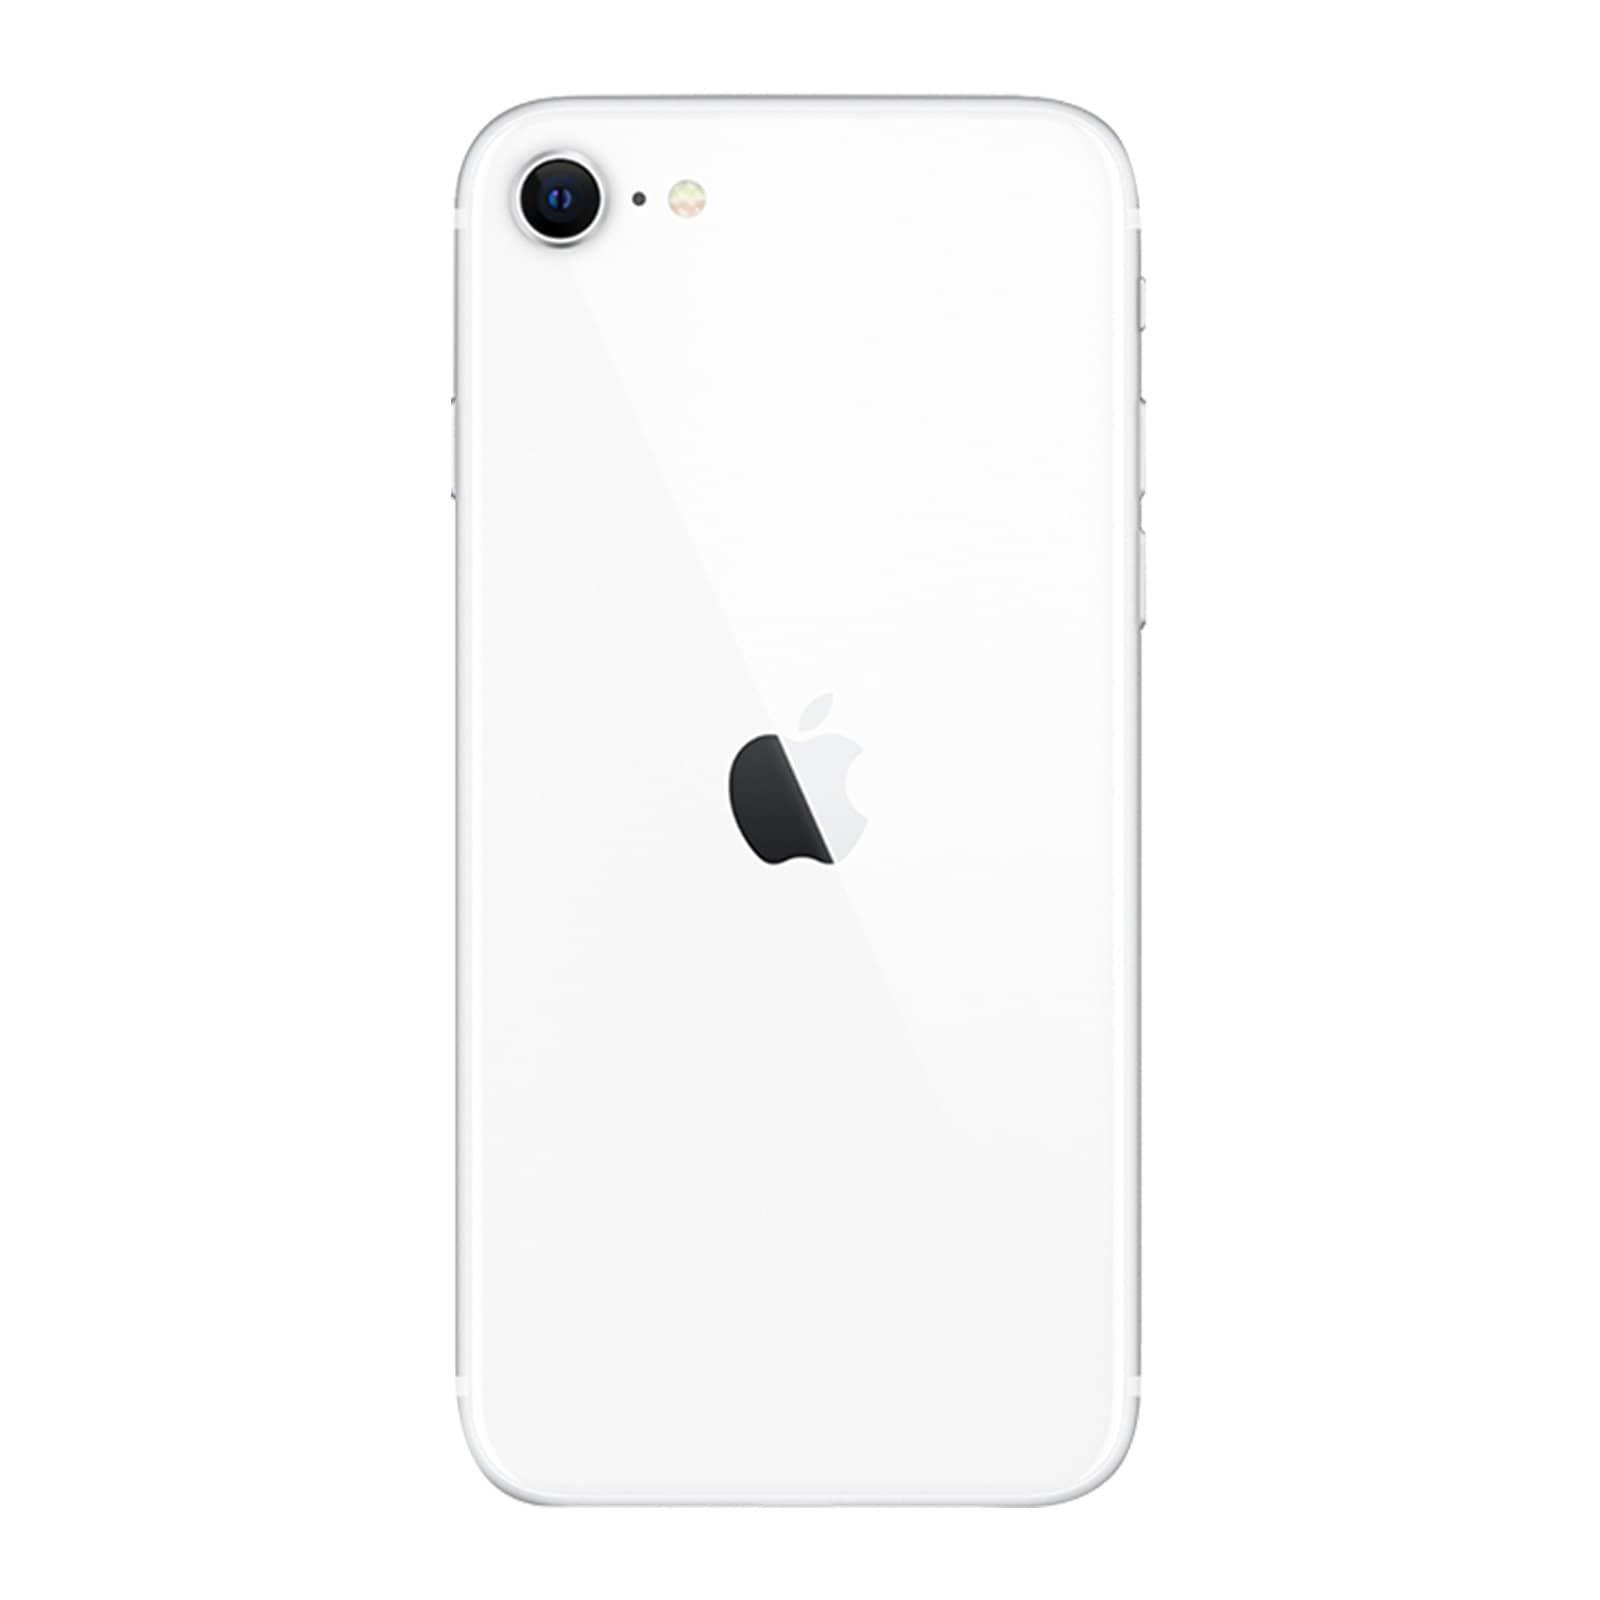 Apple iPhone SE 2nd Gen 128GB White Very Good Unlocked